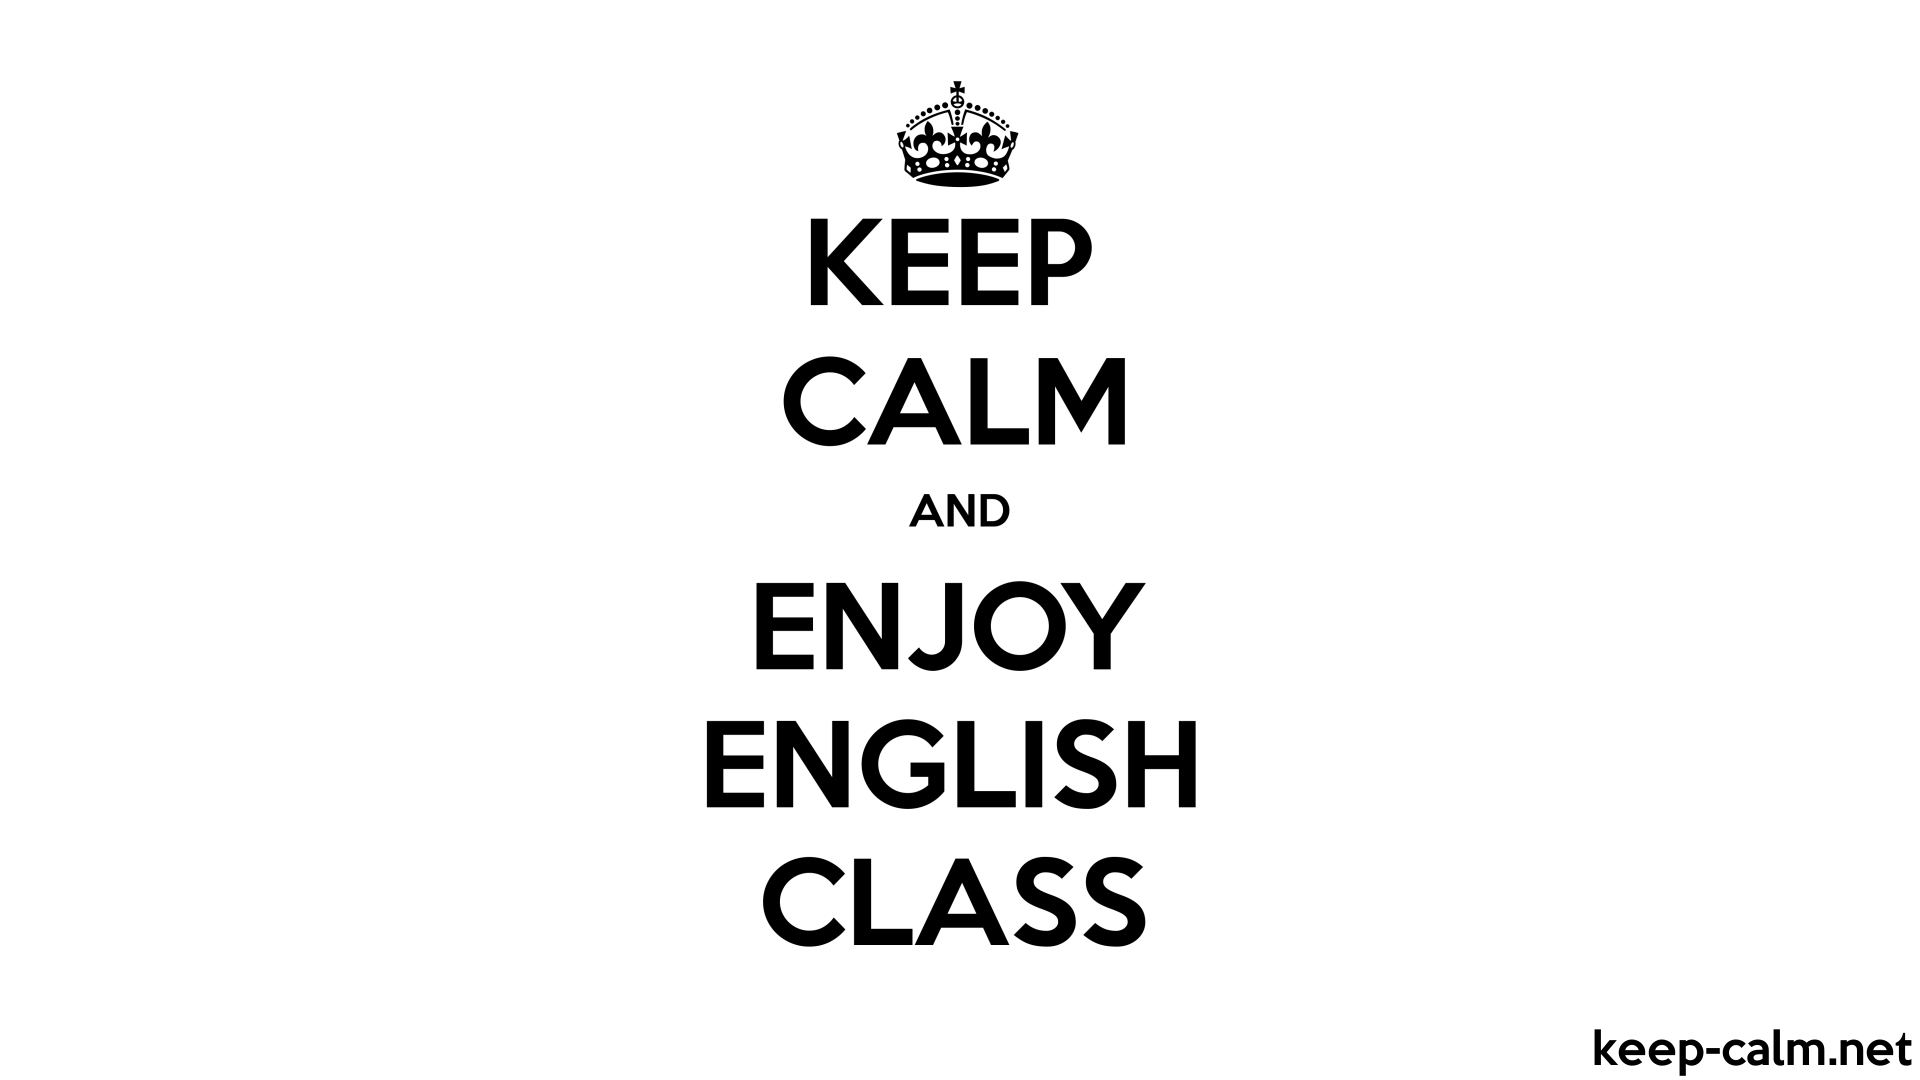 KEEP CALM AND ENJOY ENGLISH CLASS